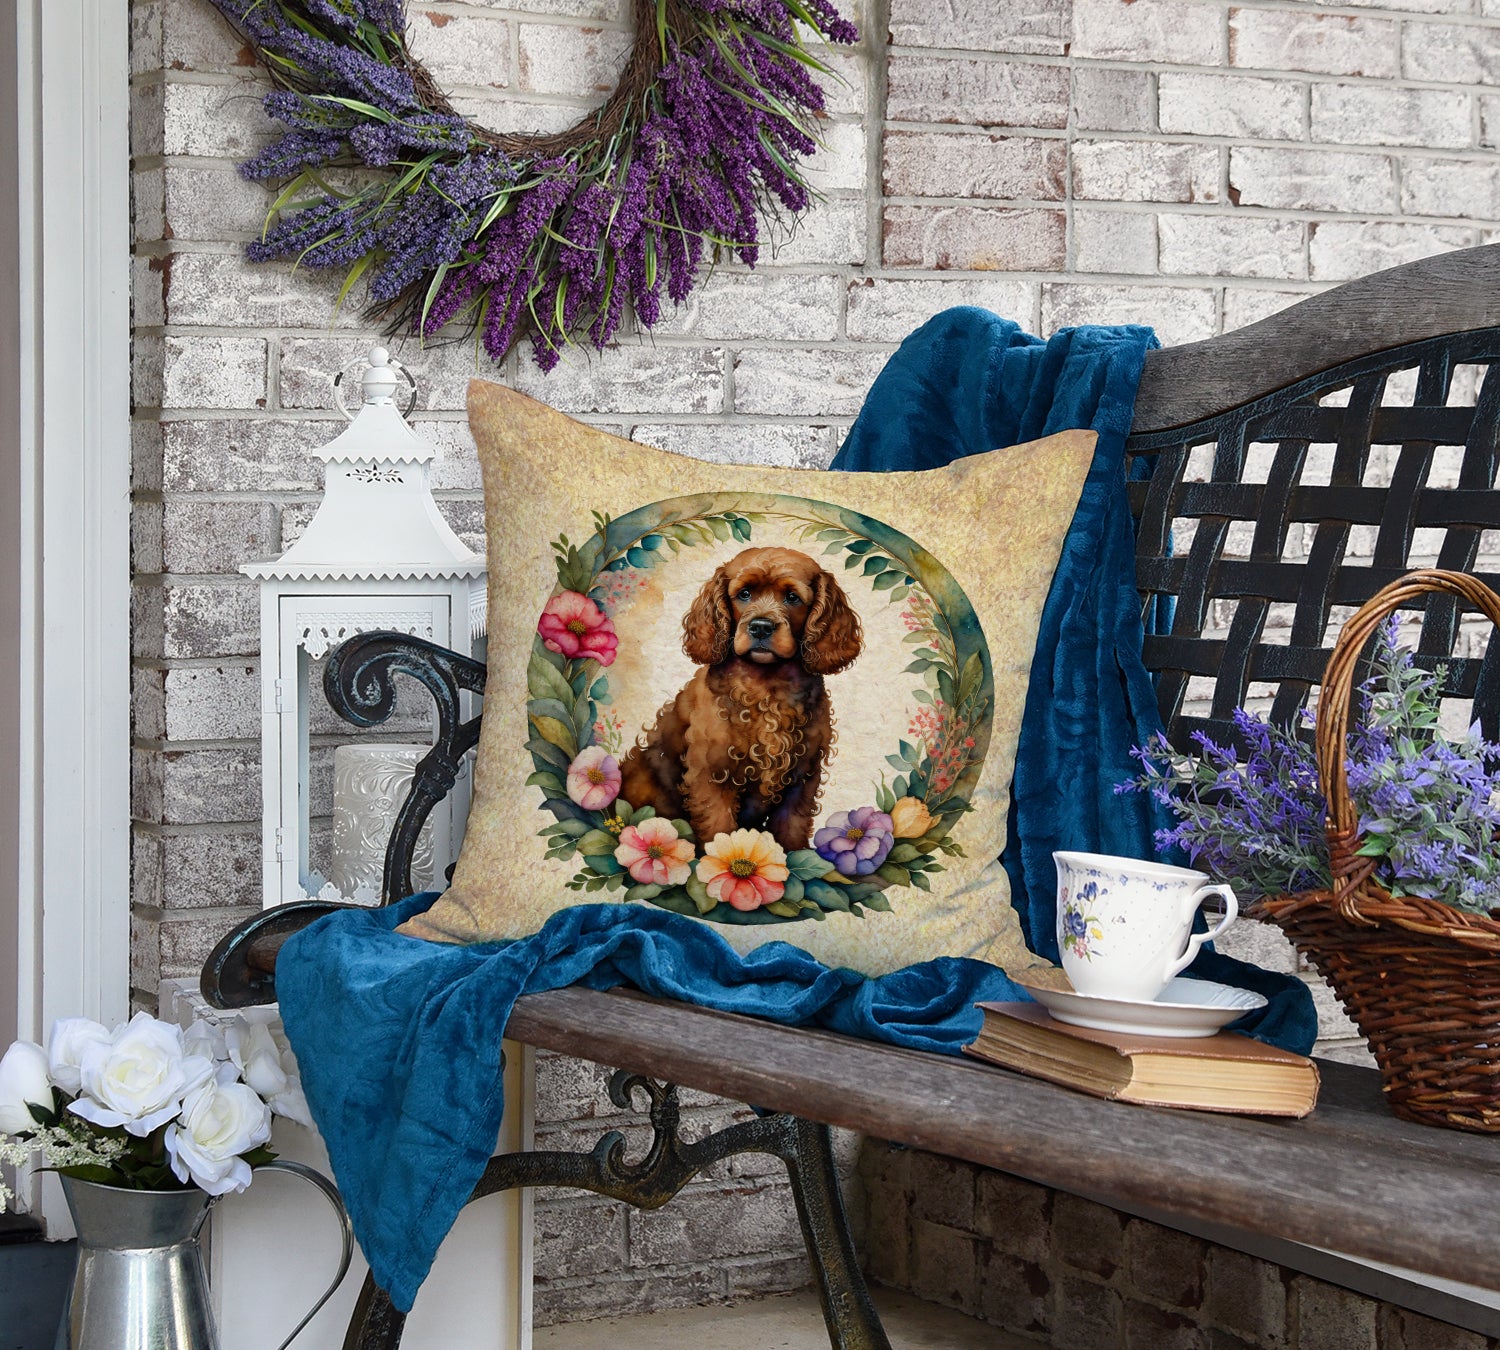 Irish Water Spaniel and Flowers Fabric Decorative Pillow